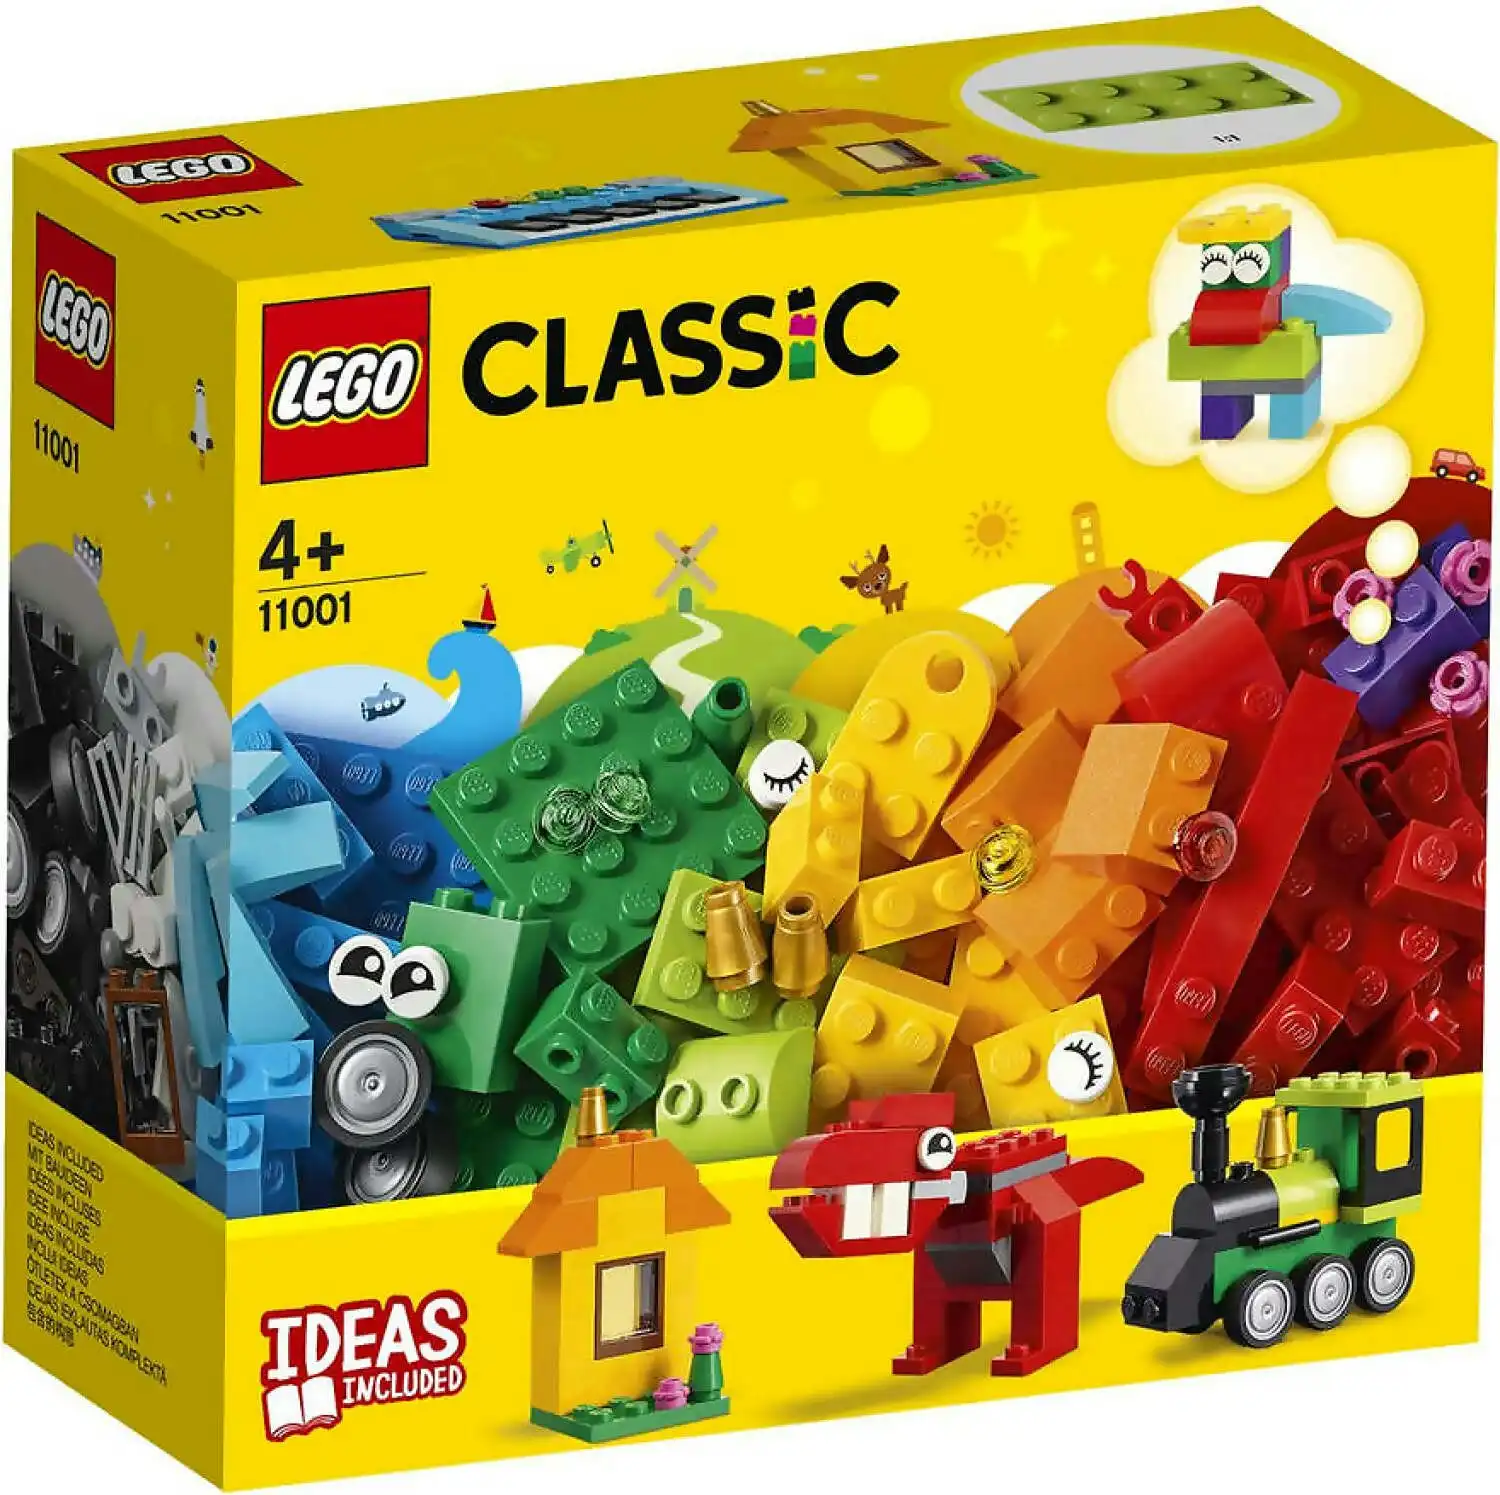 LEGO 11001 Bricks And Ideas - Classic 4+